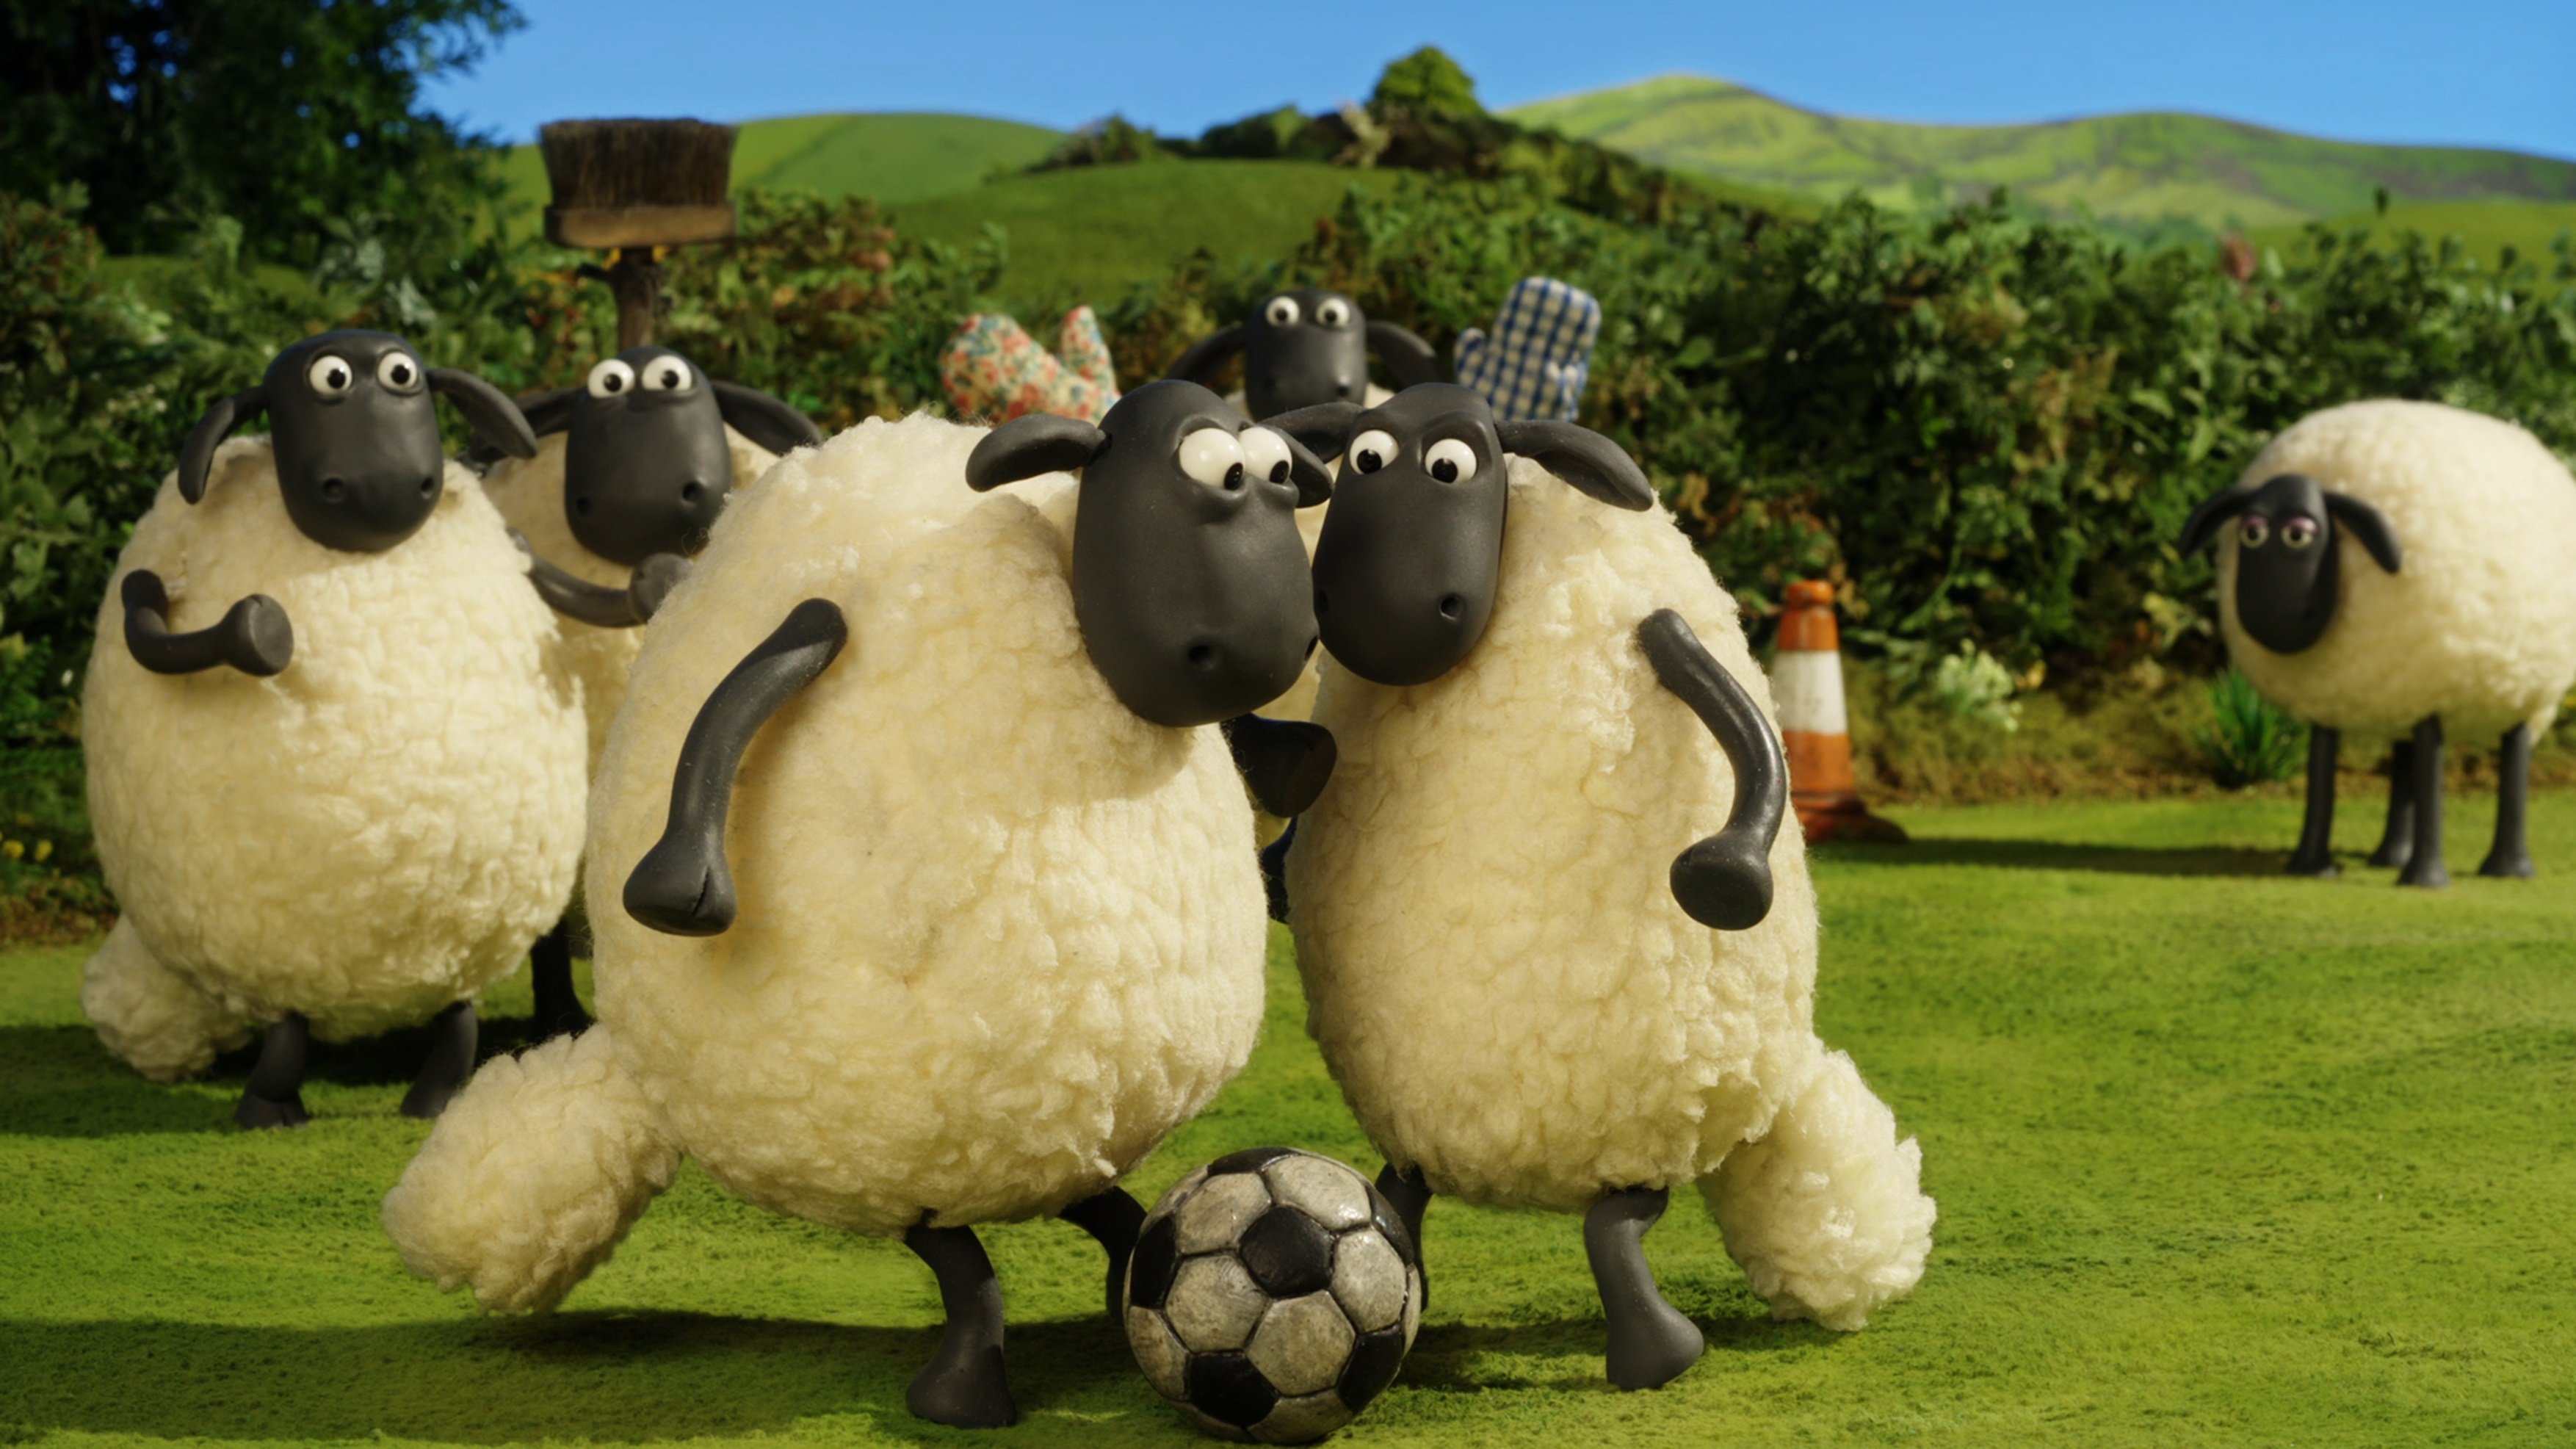 shaun the sheep, Animation, Family, Comedy, Shaun, Sheep, Adventure Wallpaper